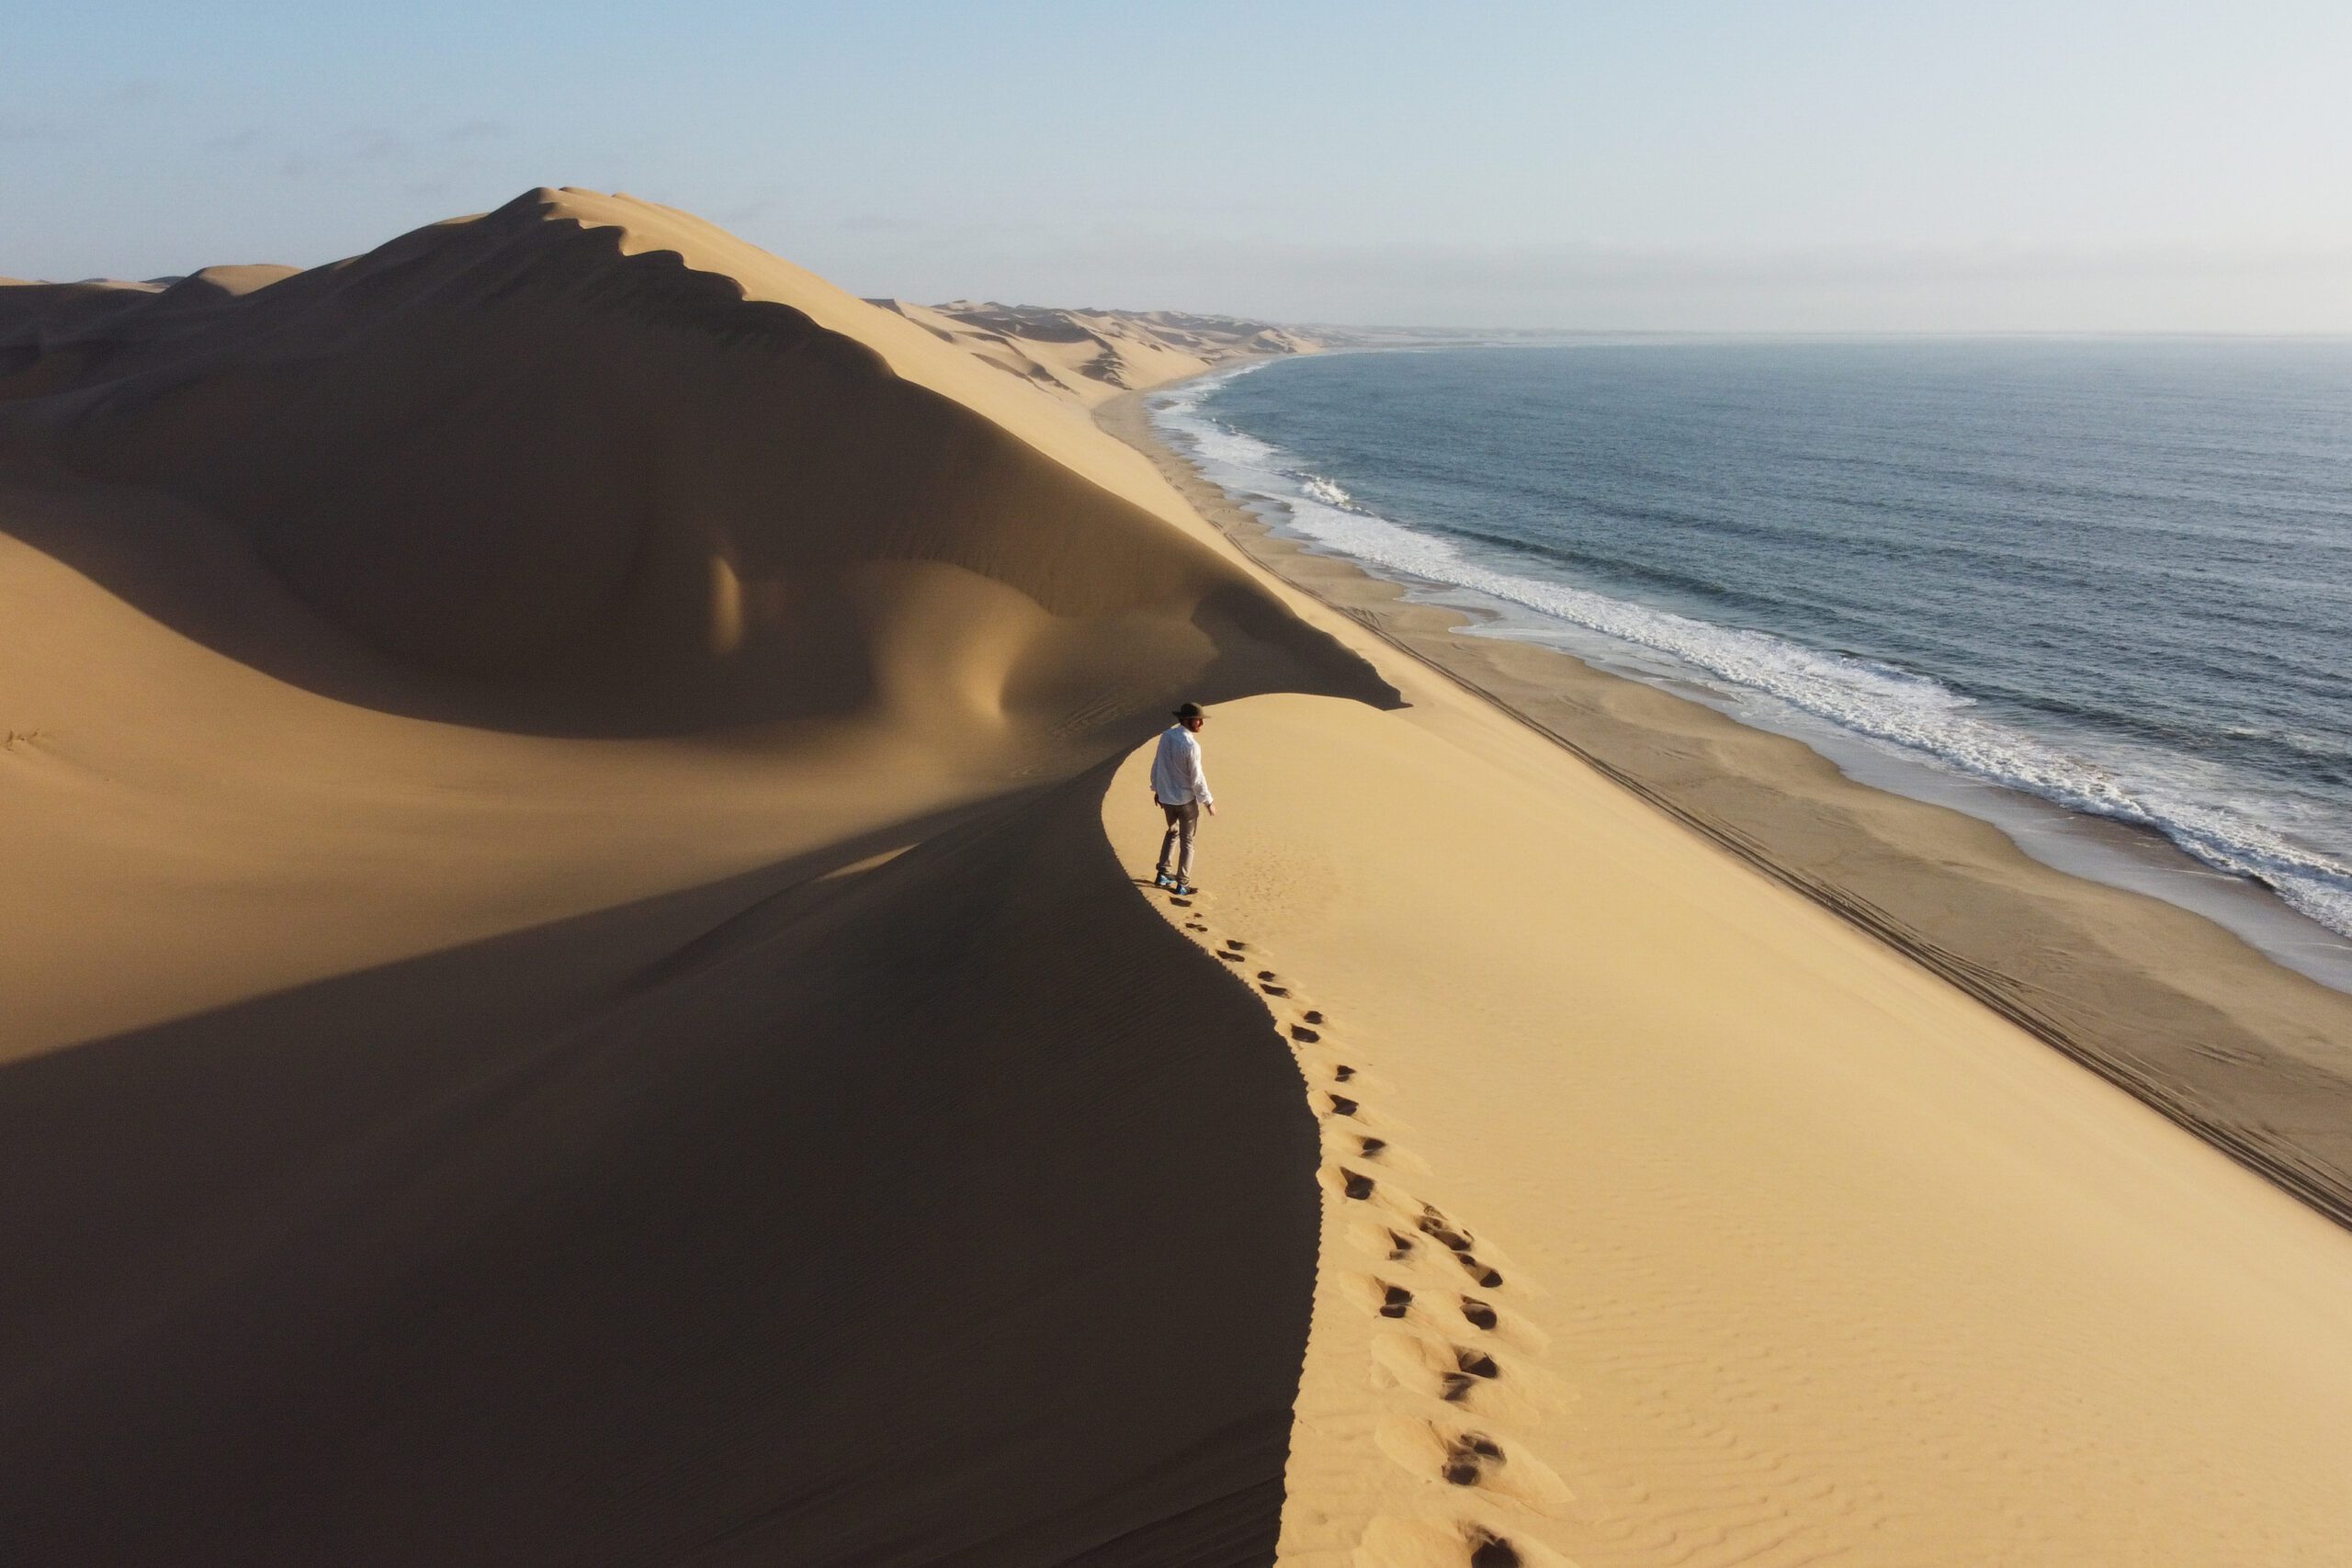 Where the Namib Desert meets the Atlantic Ocean